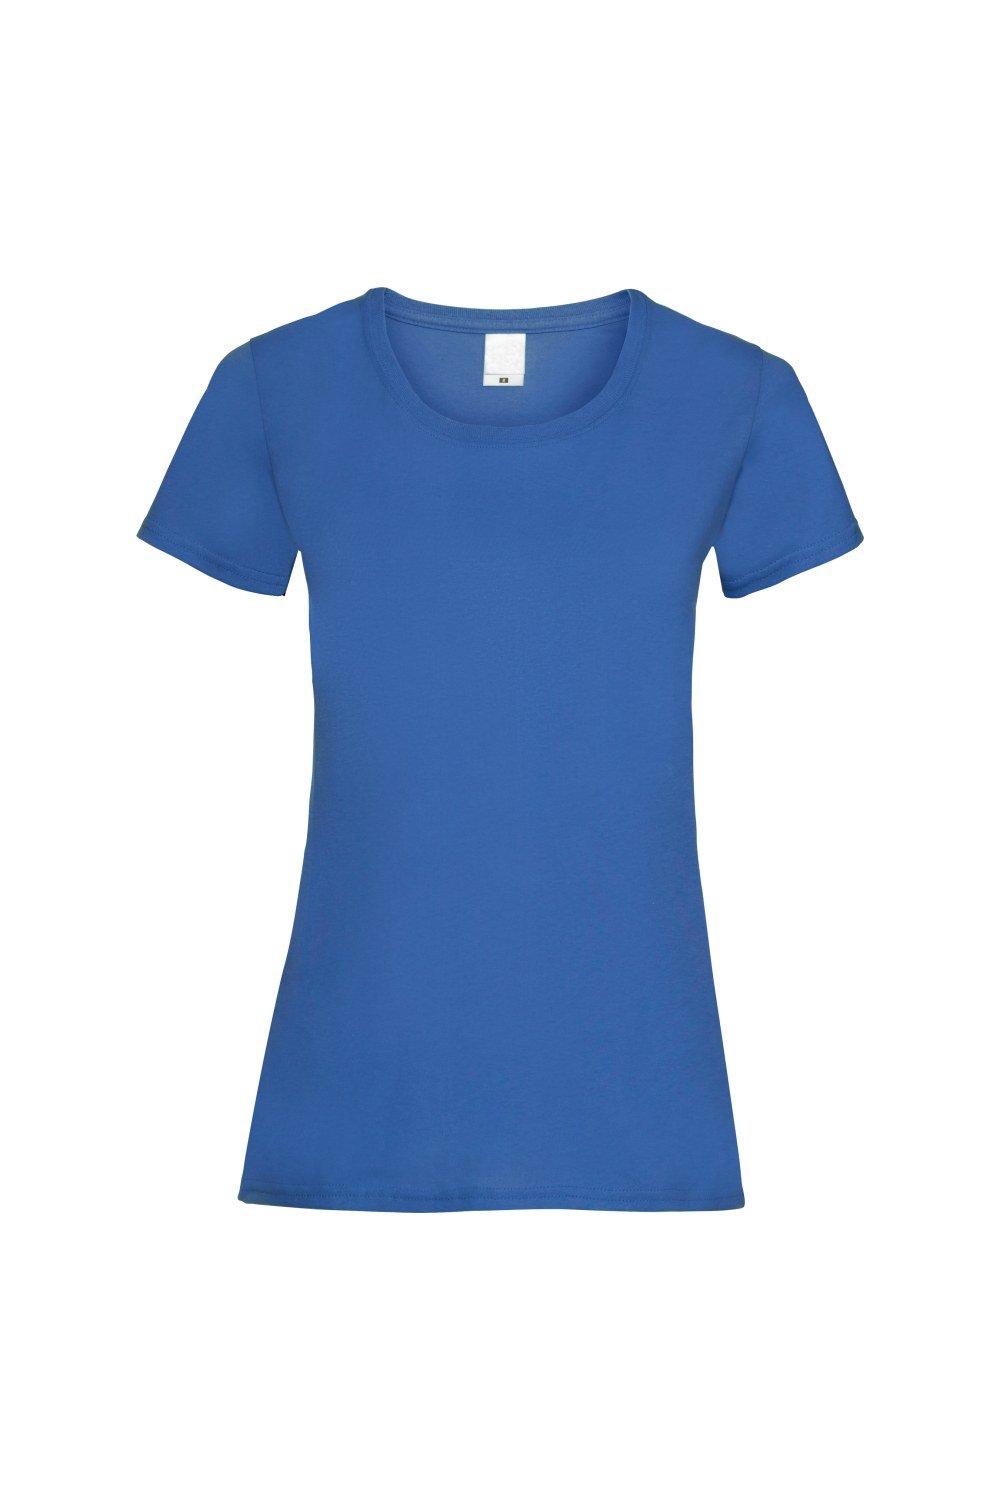 Повседневная футболка с короткими рукавами Value Universal Textiles, синий повседневная футболка value с длинным рукавом universal textiles белый